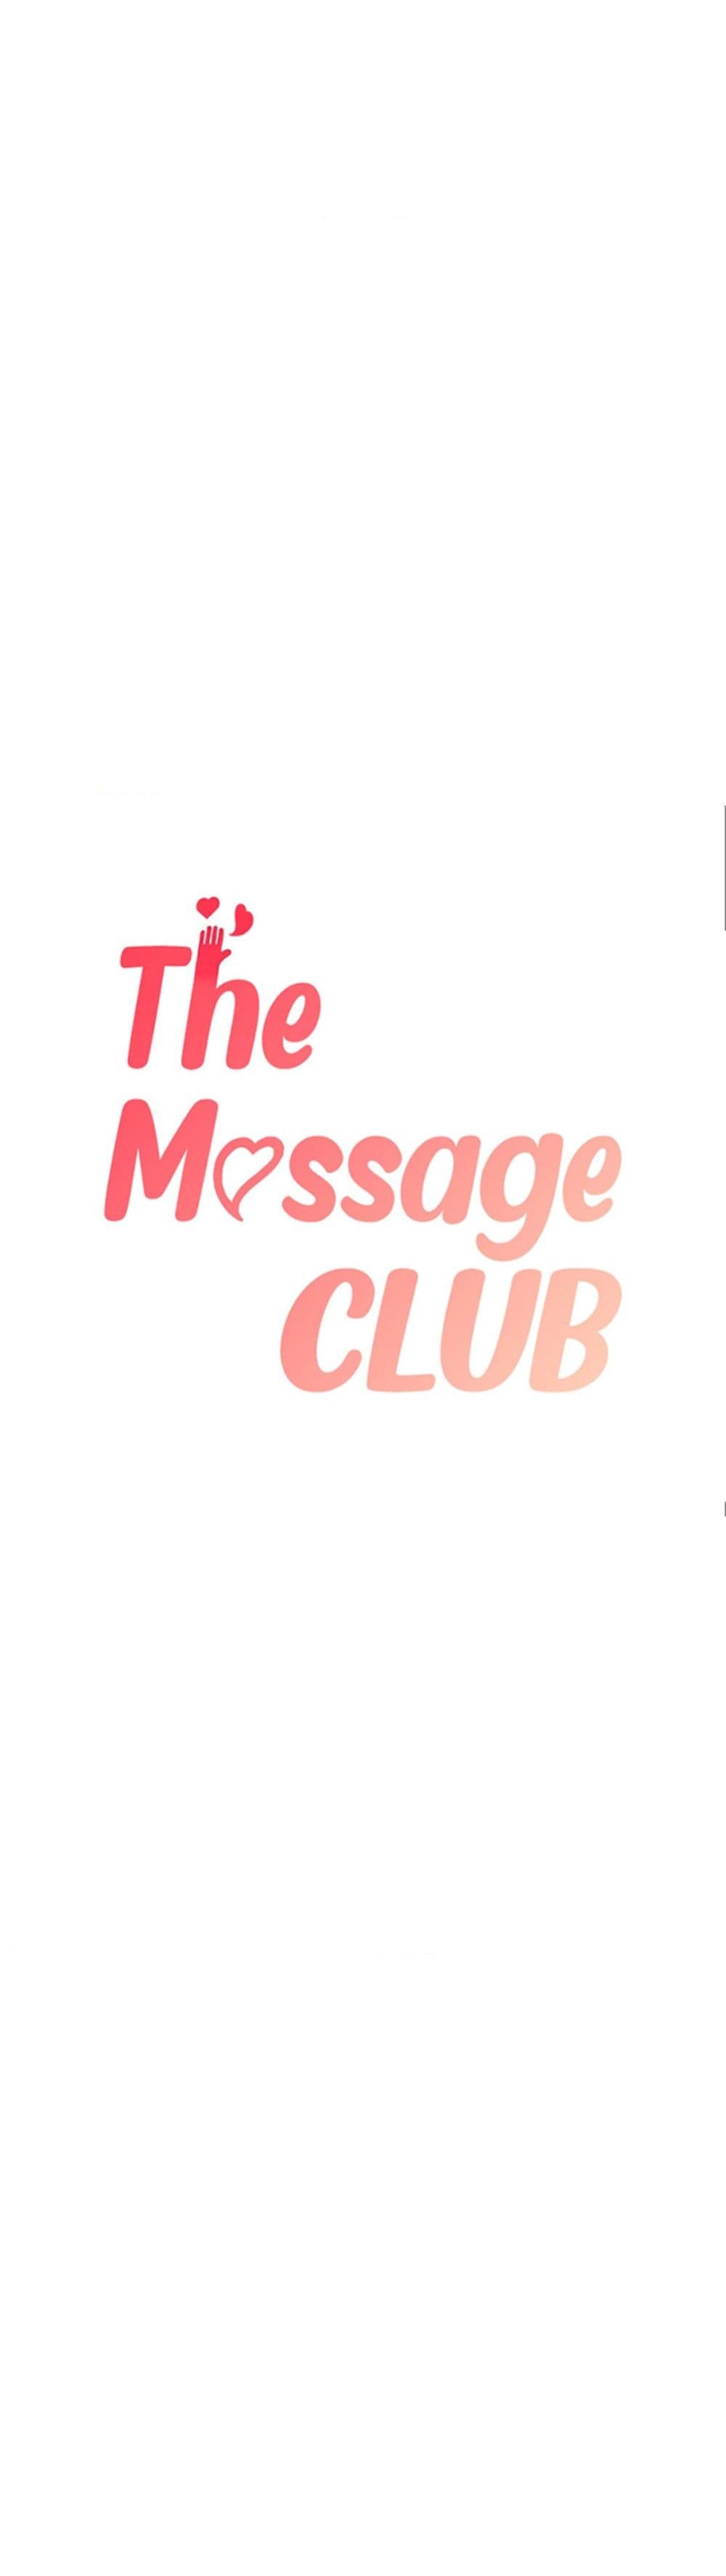 The Massage Club 8-8